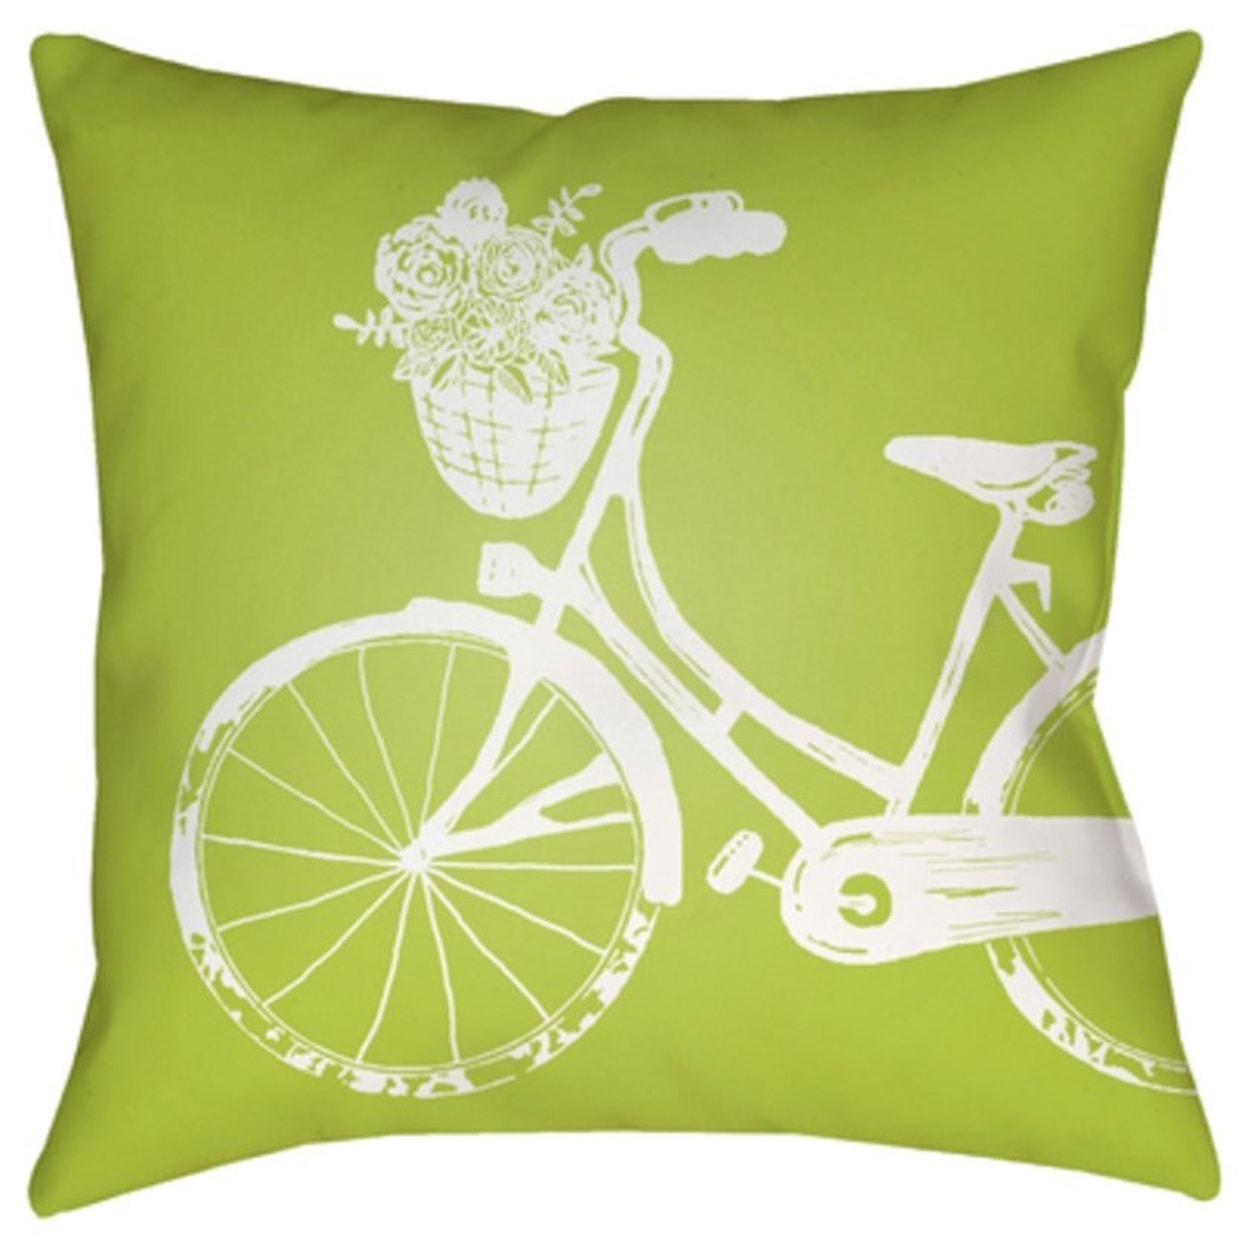 Surya Bicycle Pillow